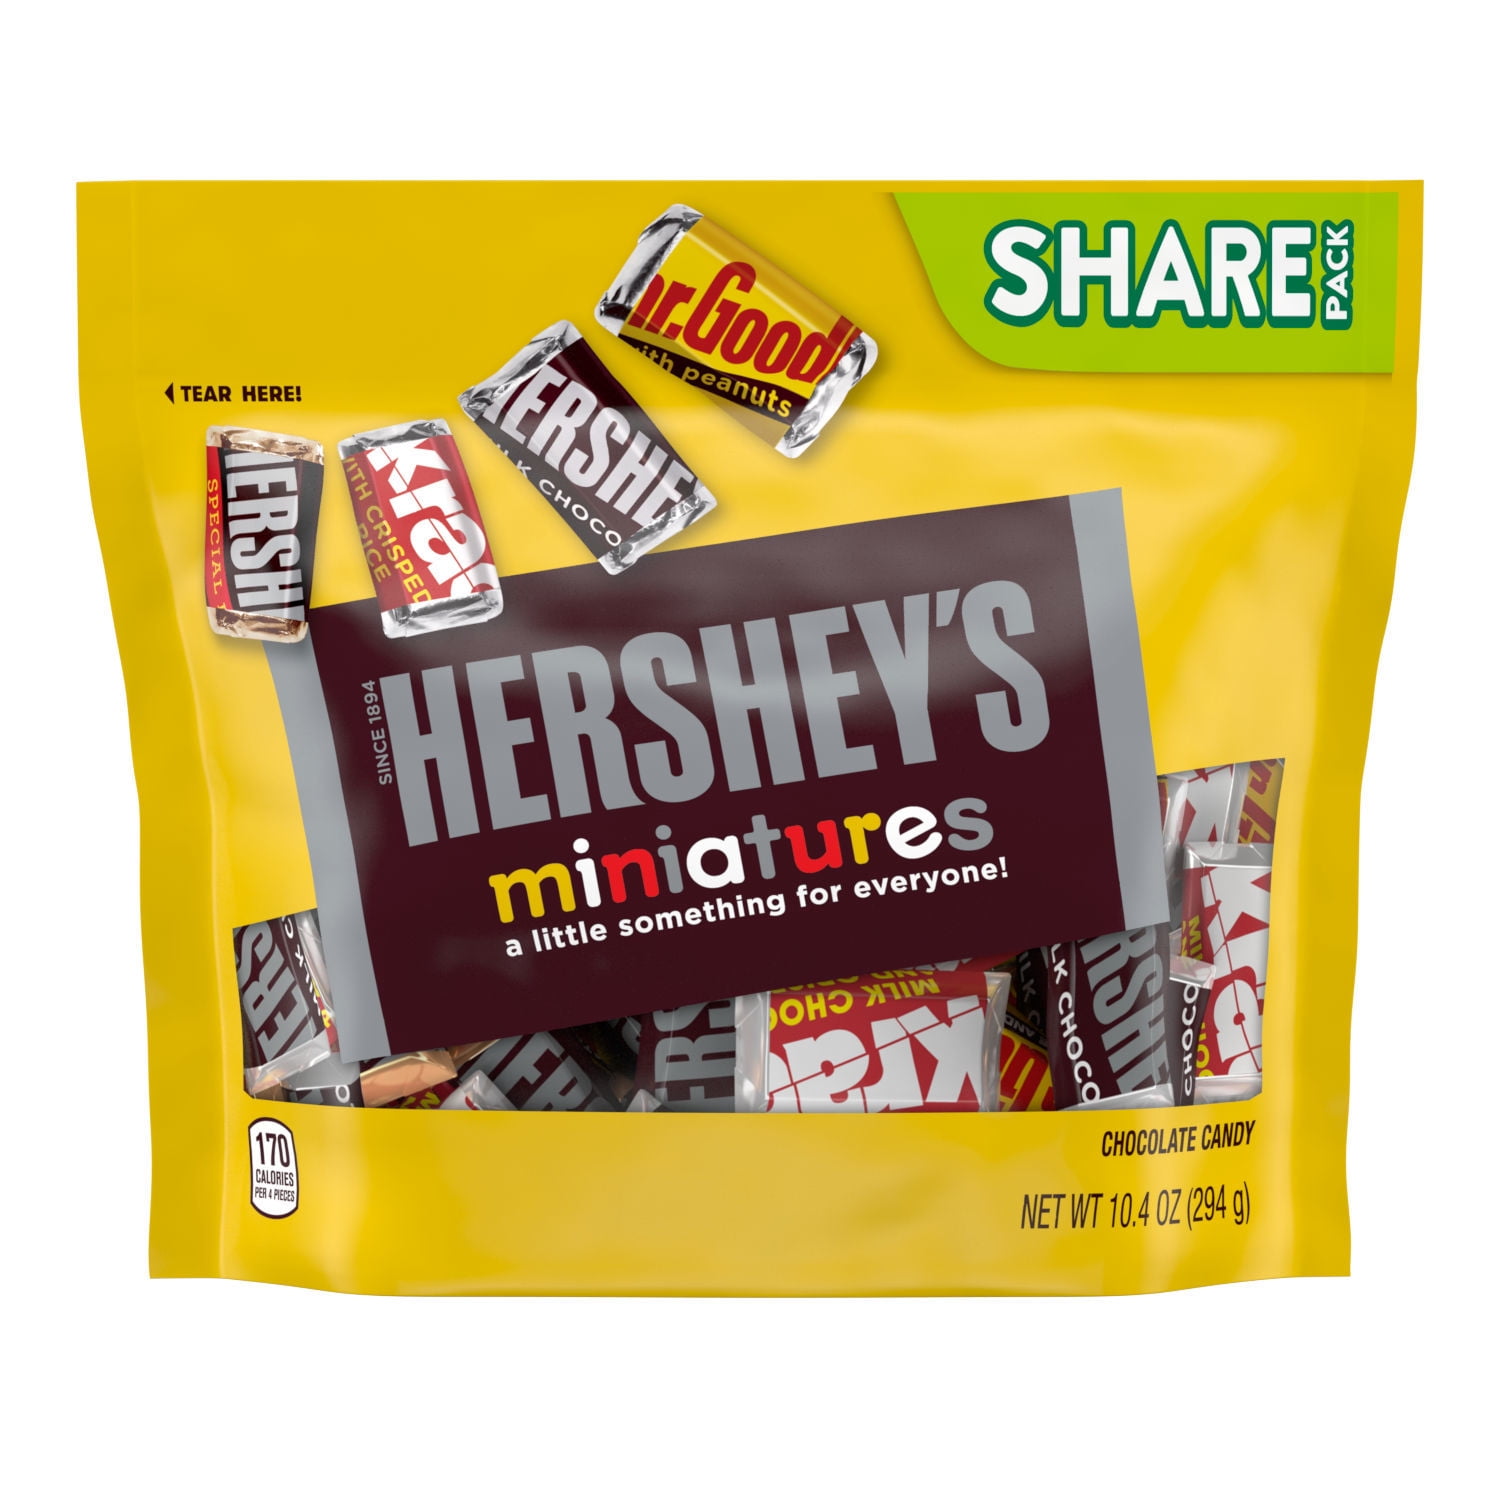 Hershey's Kisses Milk Chocolate, Share Pack - 10.8 oz